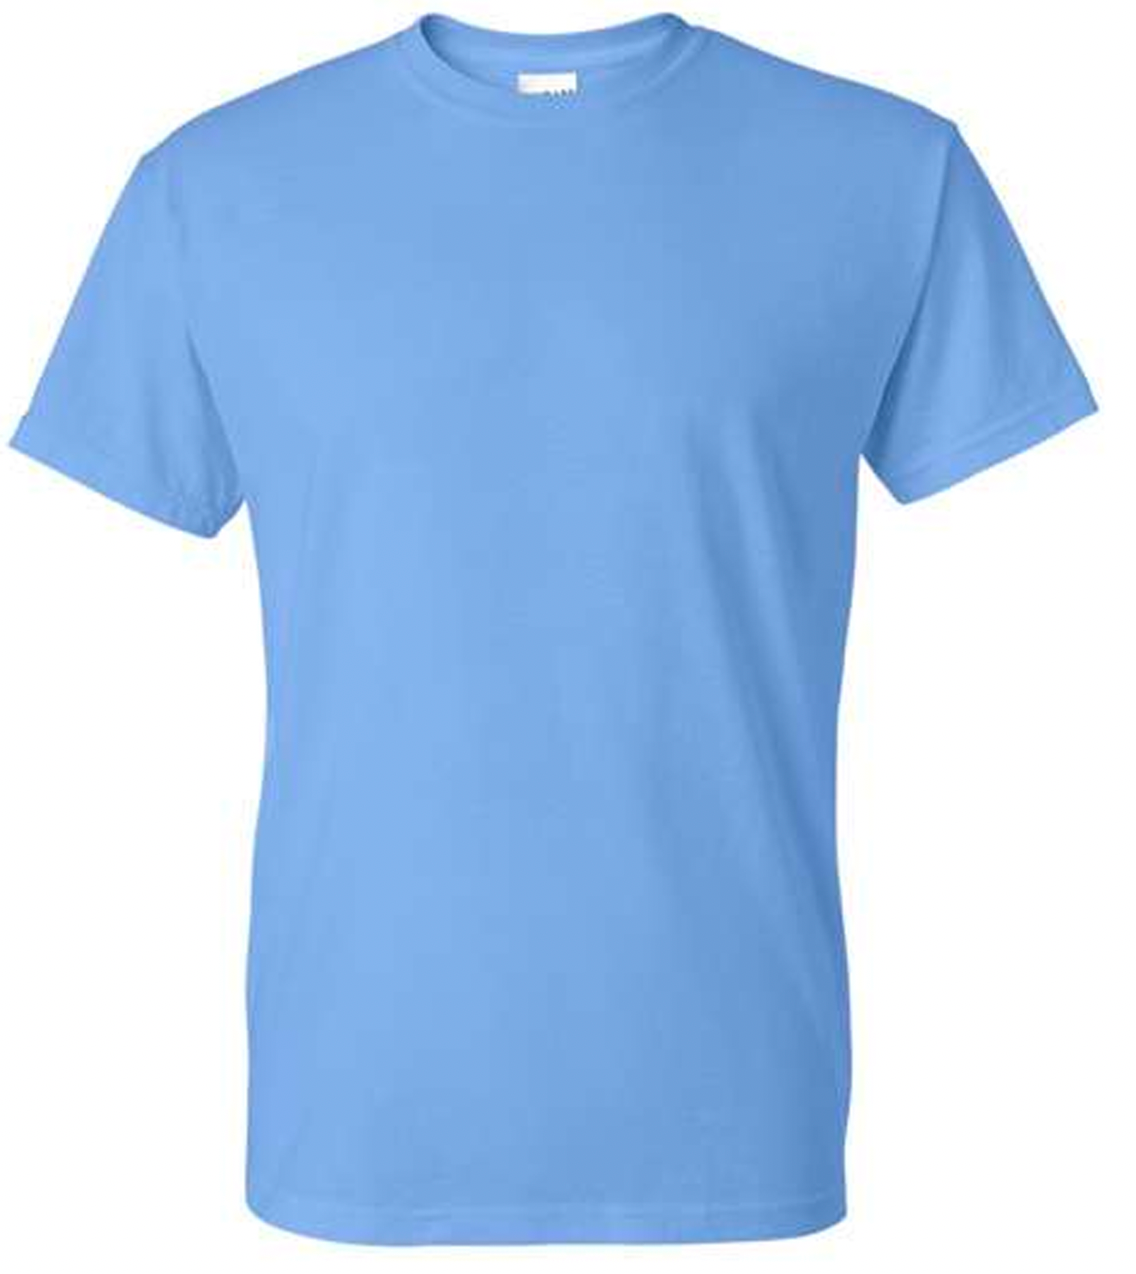 Full Chest Logo - Hopewell Health T-Shirts